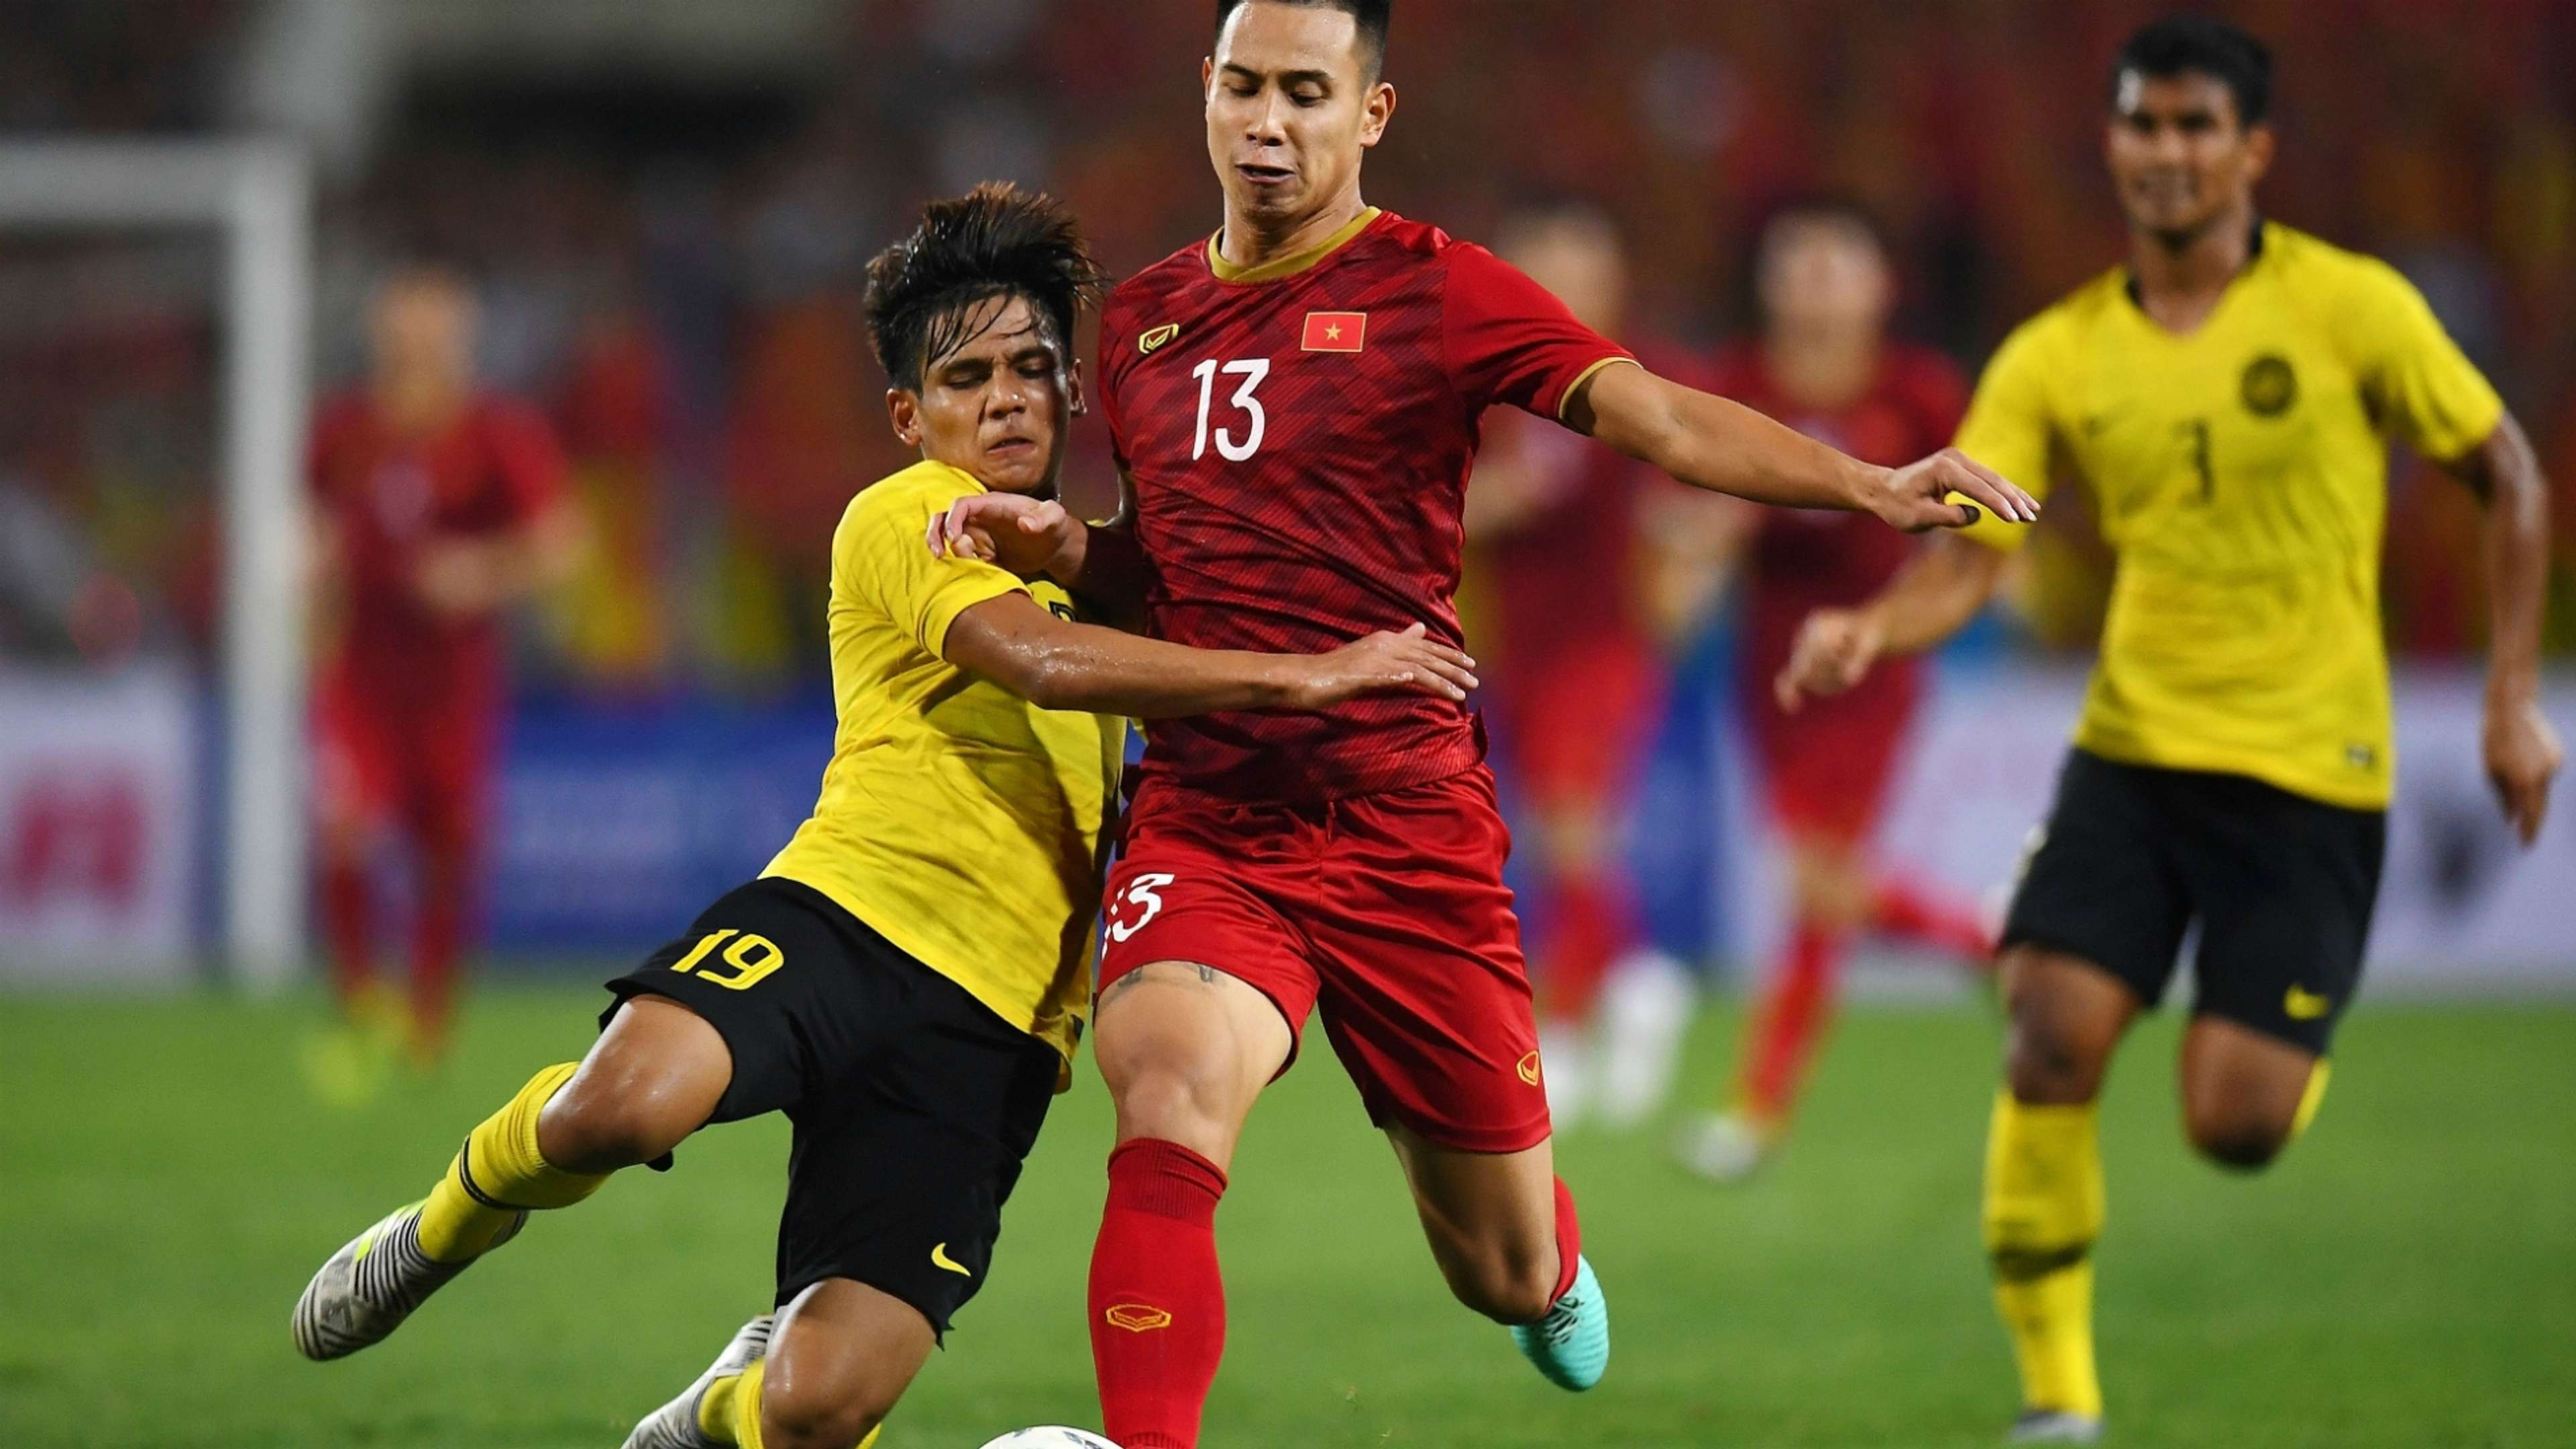 Akhyar Rashid, Vietnam v Malaysia, World Cup qualifier, 10 Oct 2019